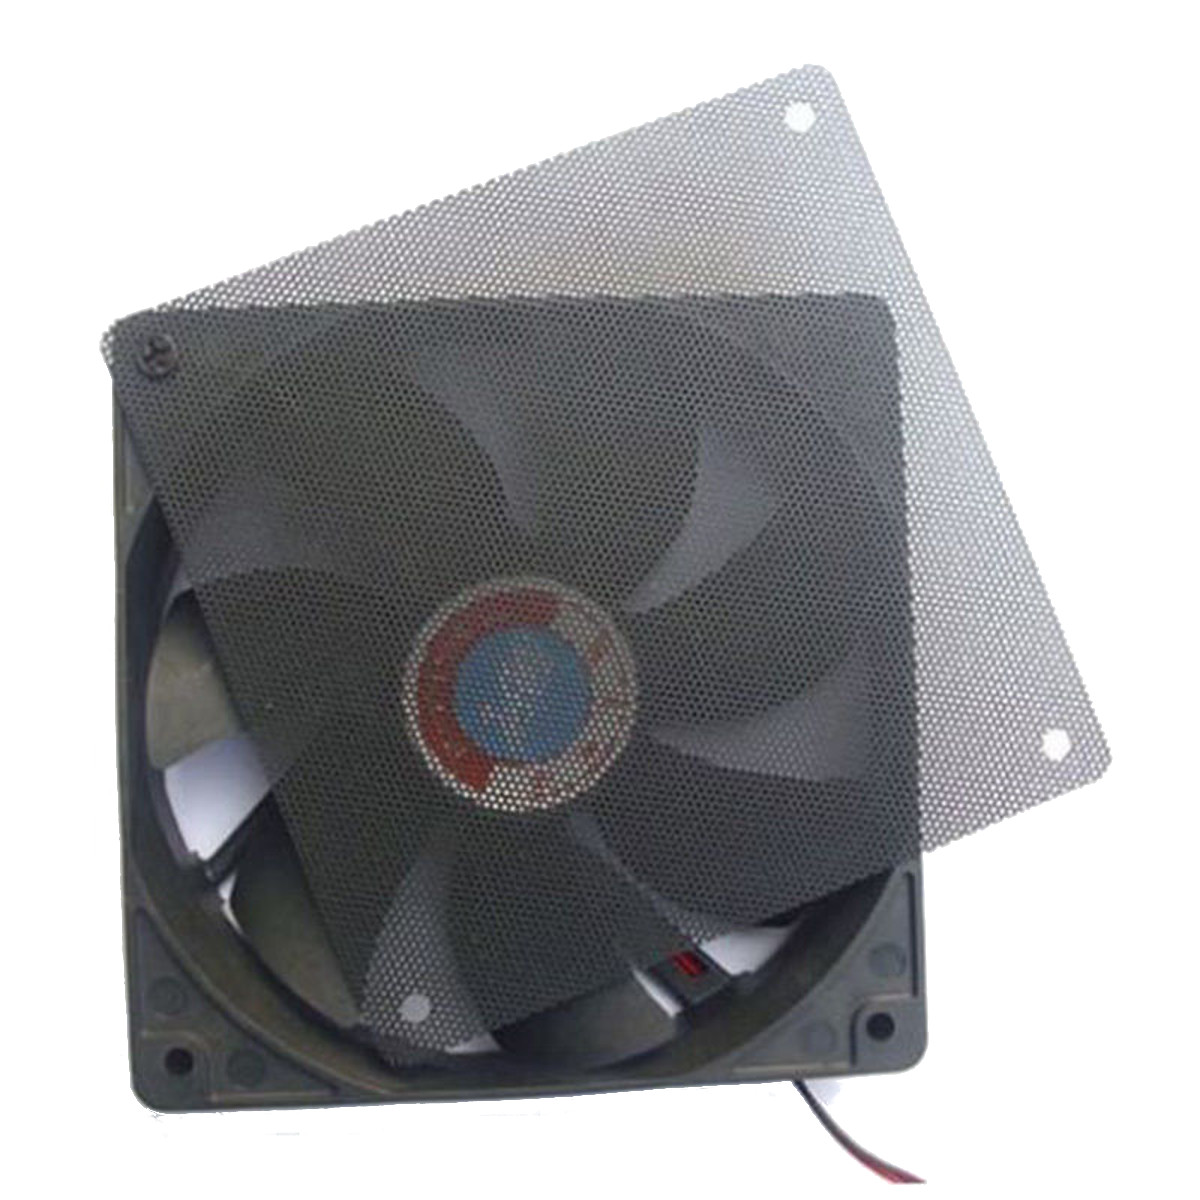 10X-Black-140mm-PVC-Computer-PC-Cooler-Fan-Case-Cover-Dust-Filter-Mesh-Cuttable-Dust-proof-Net-1229888